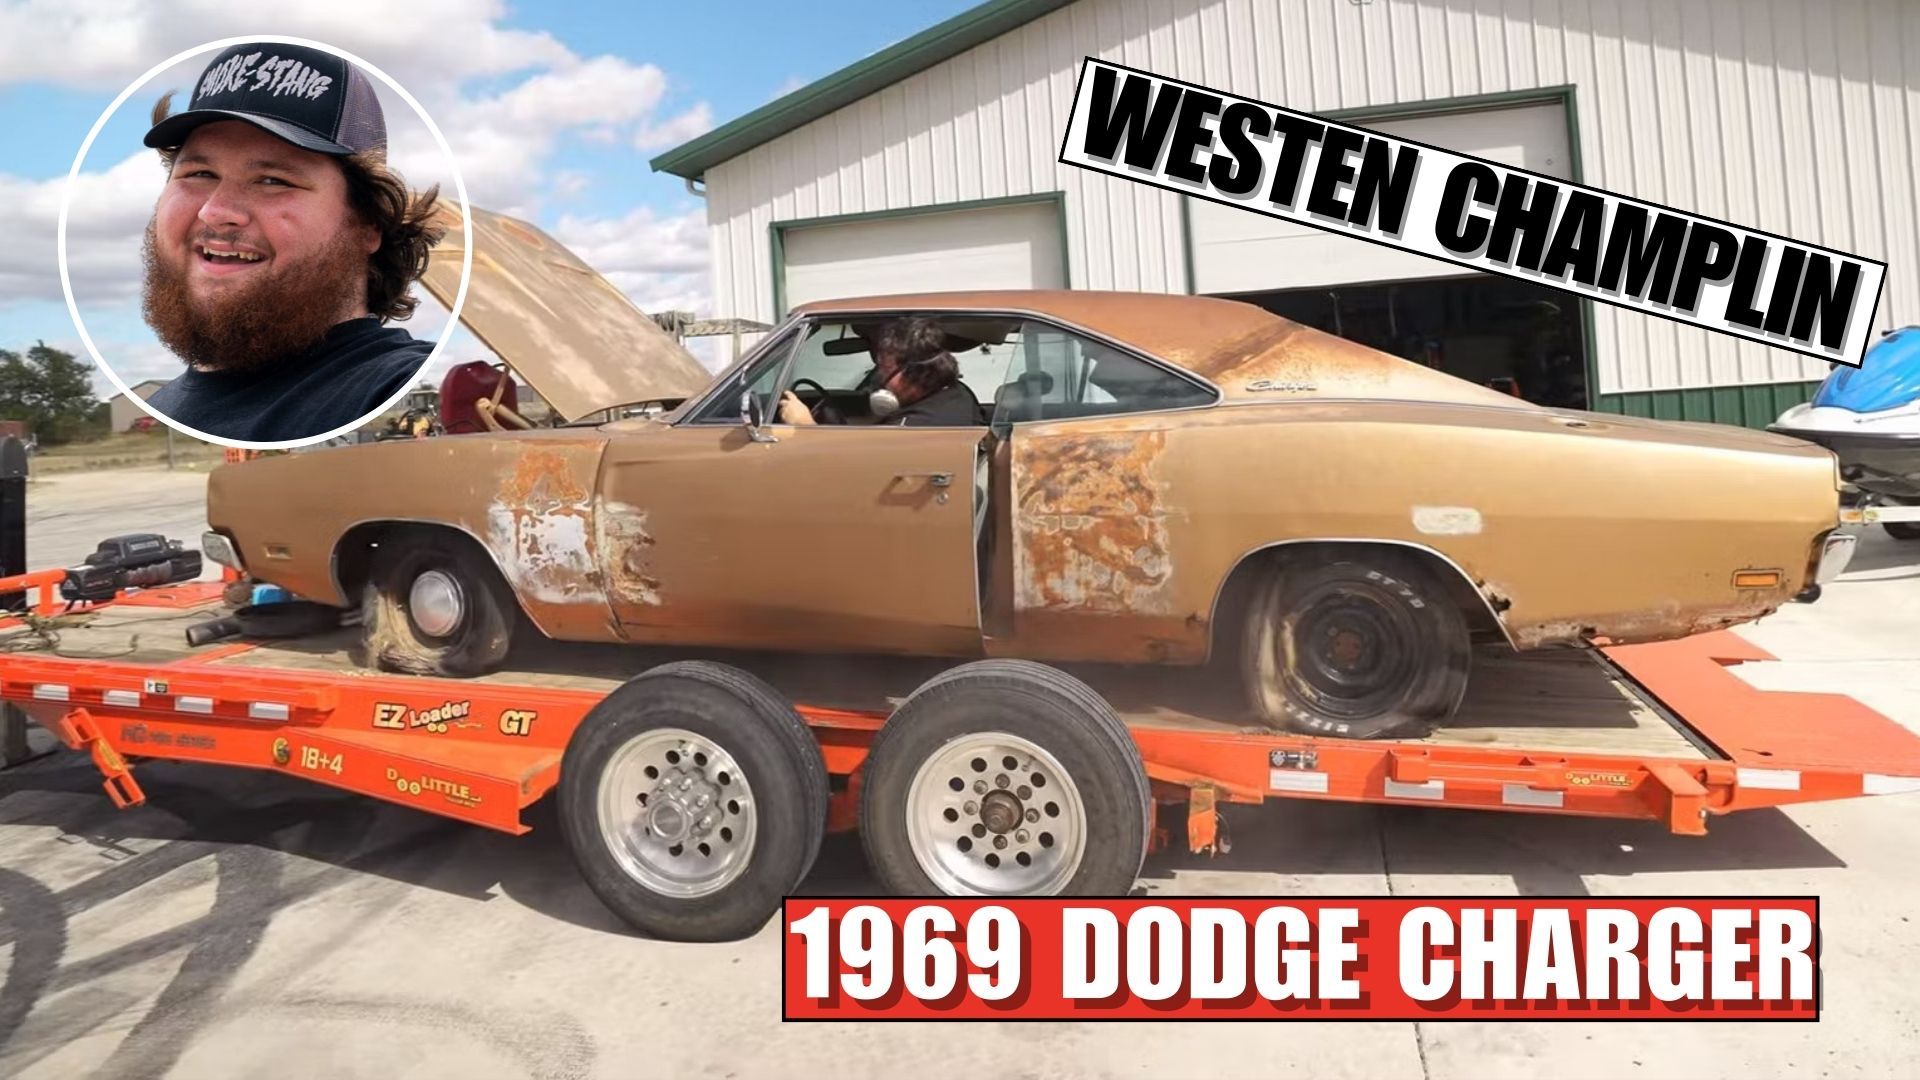 Westen Champlin 1969 Dodge Charger